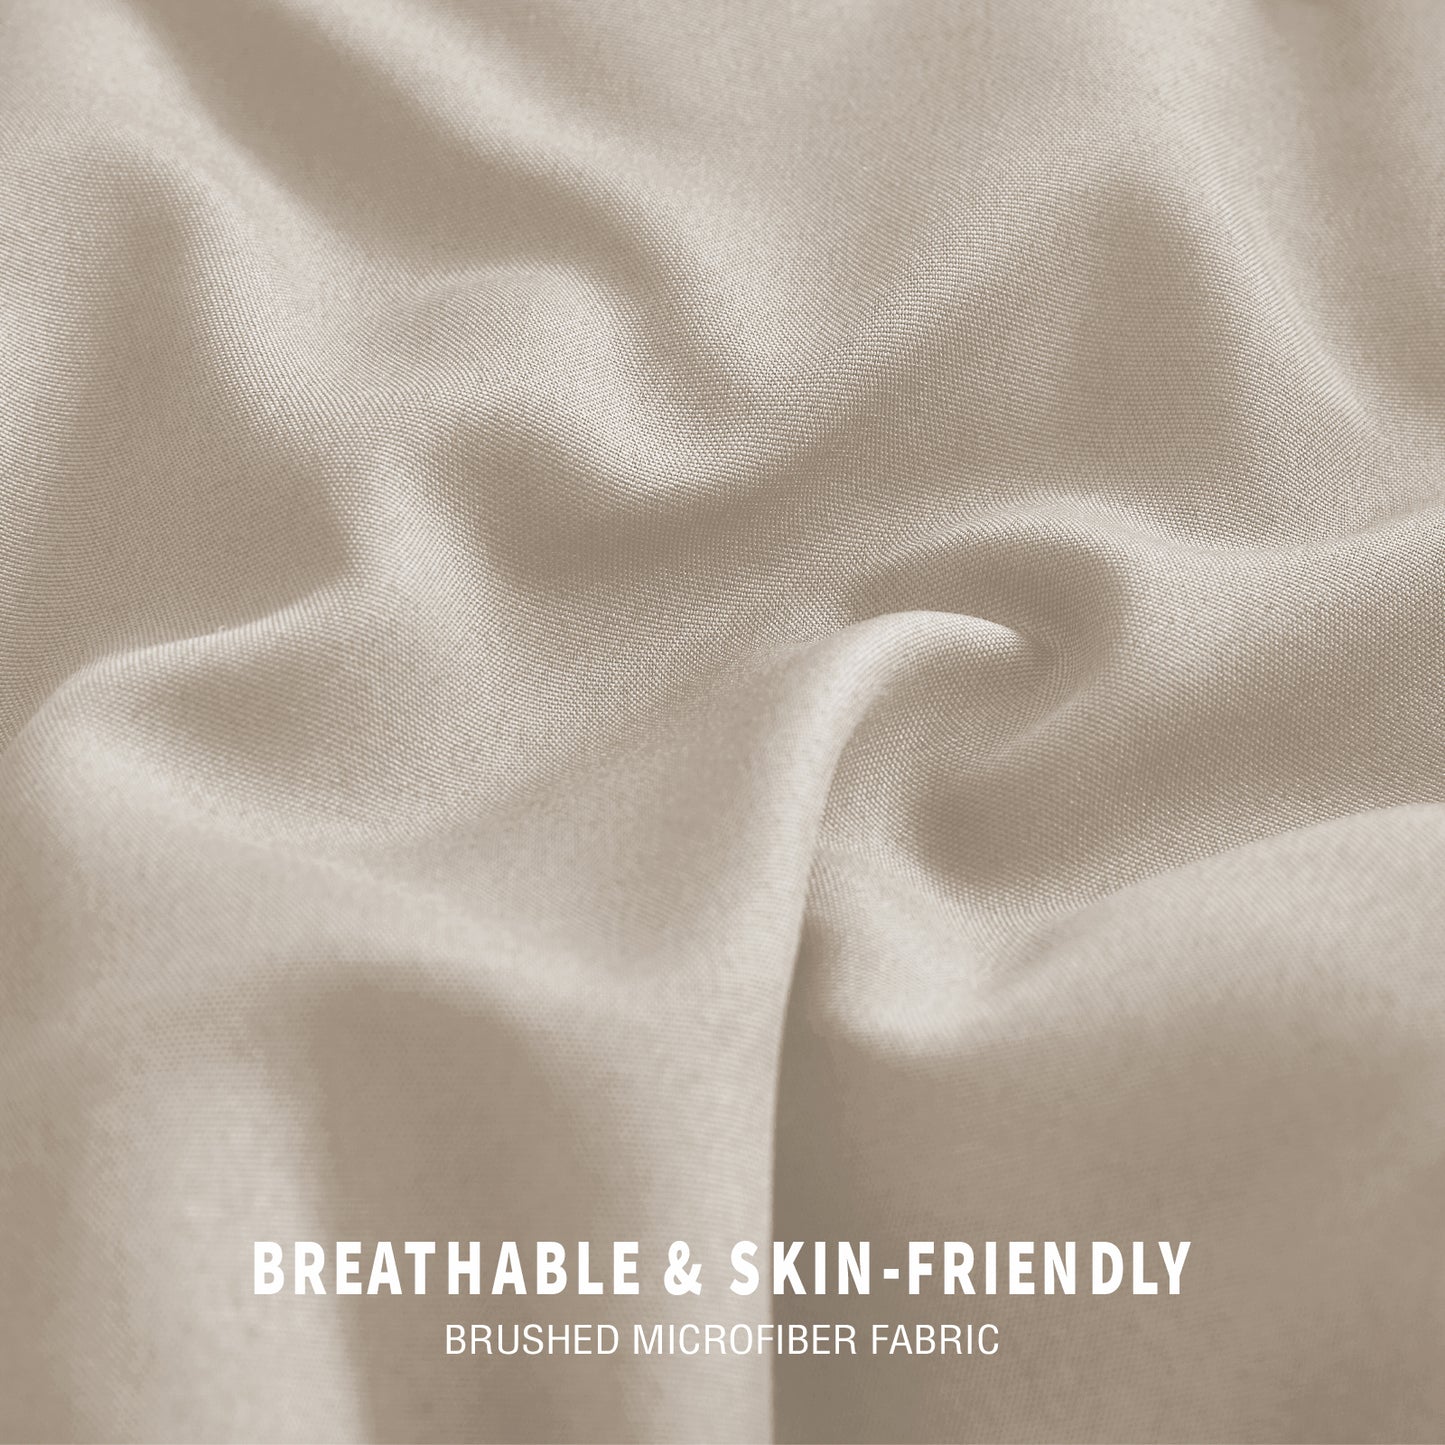 Exclusivo Mezcla Lightweight Reversible 2-Piece Comforter Set All Seasons, Down Alternative Comforter with 1 Pillow Sham, Twin Size, Beige/White